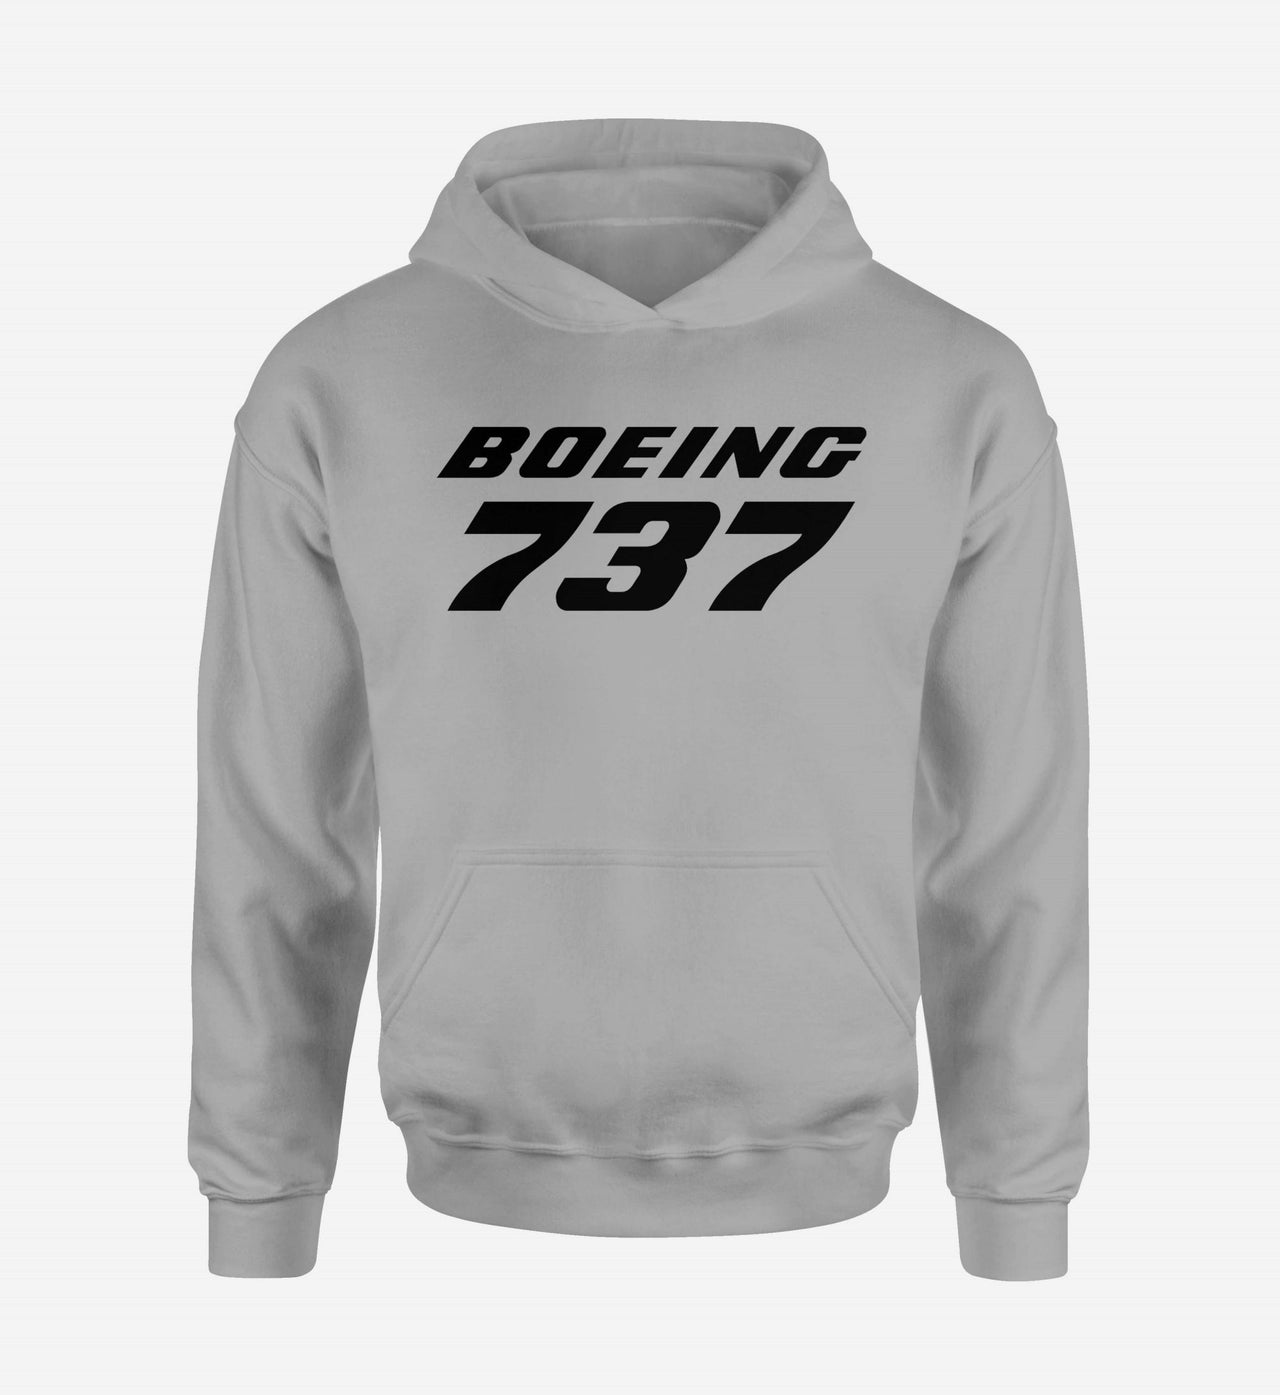 Boeing 737 & Text Designed Hoodies